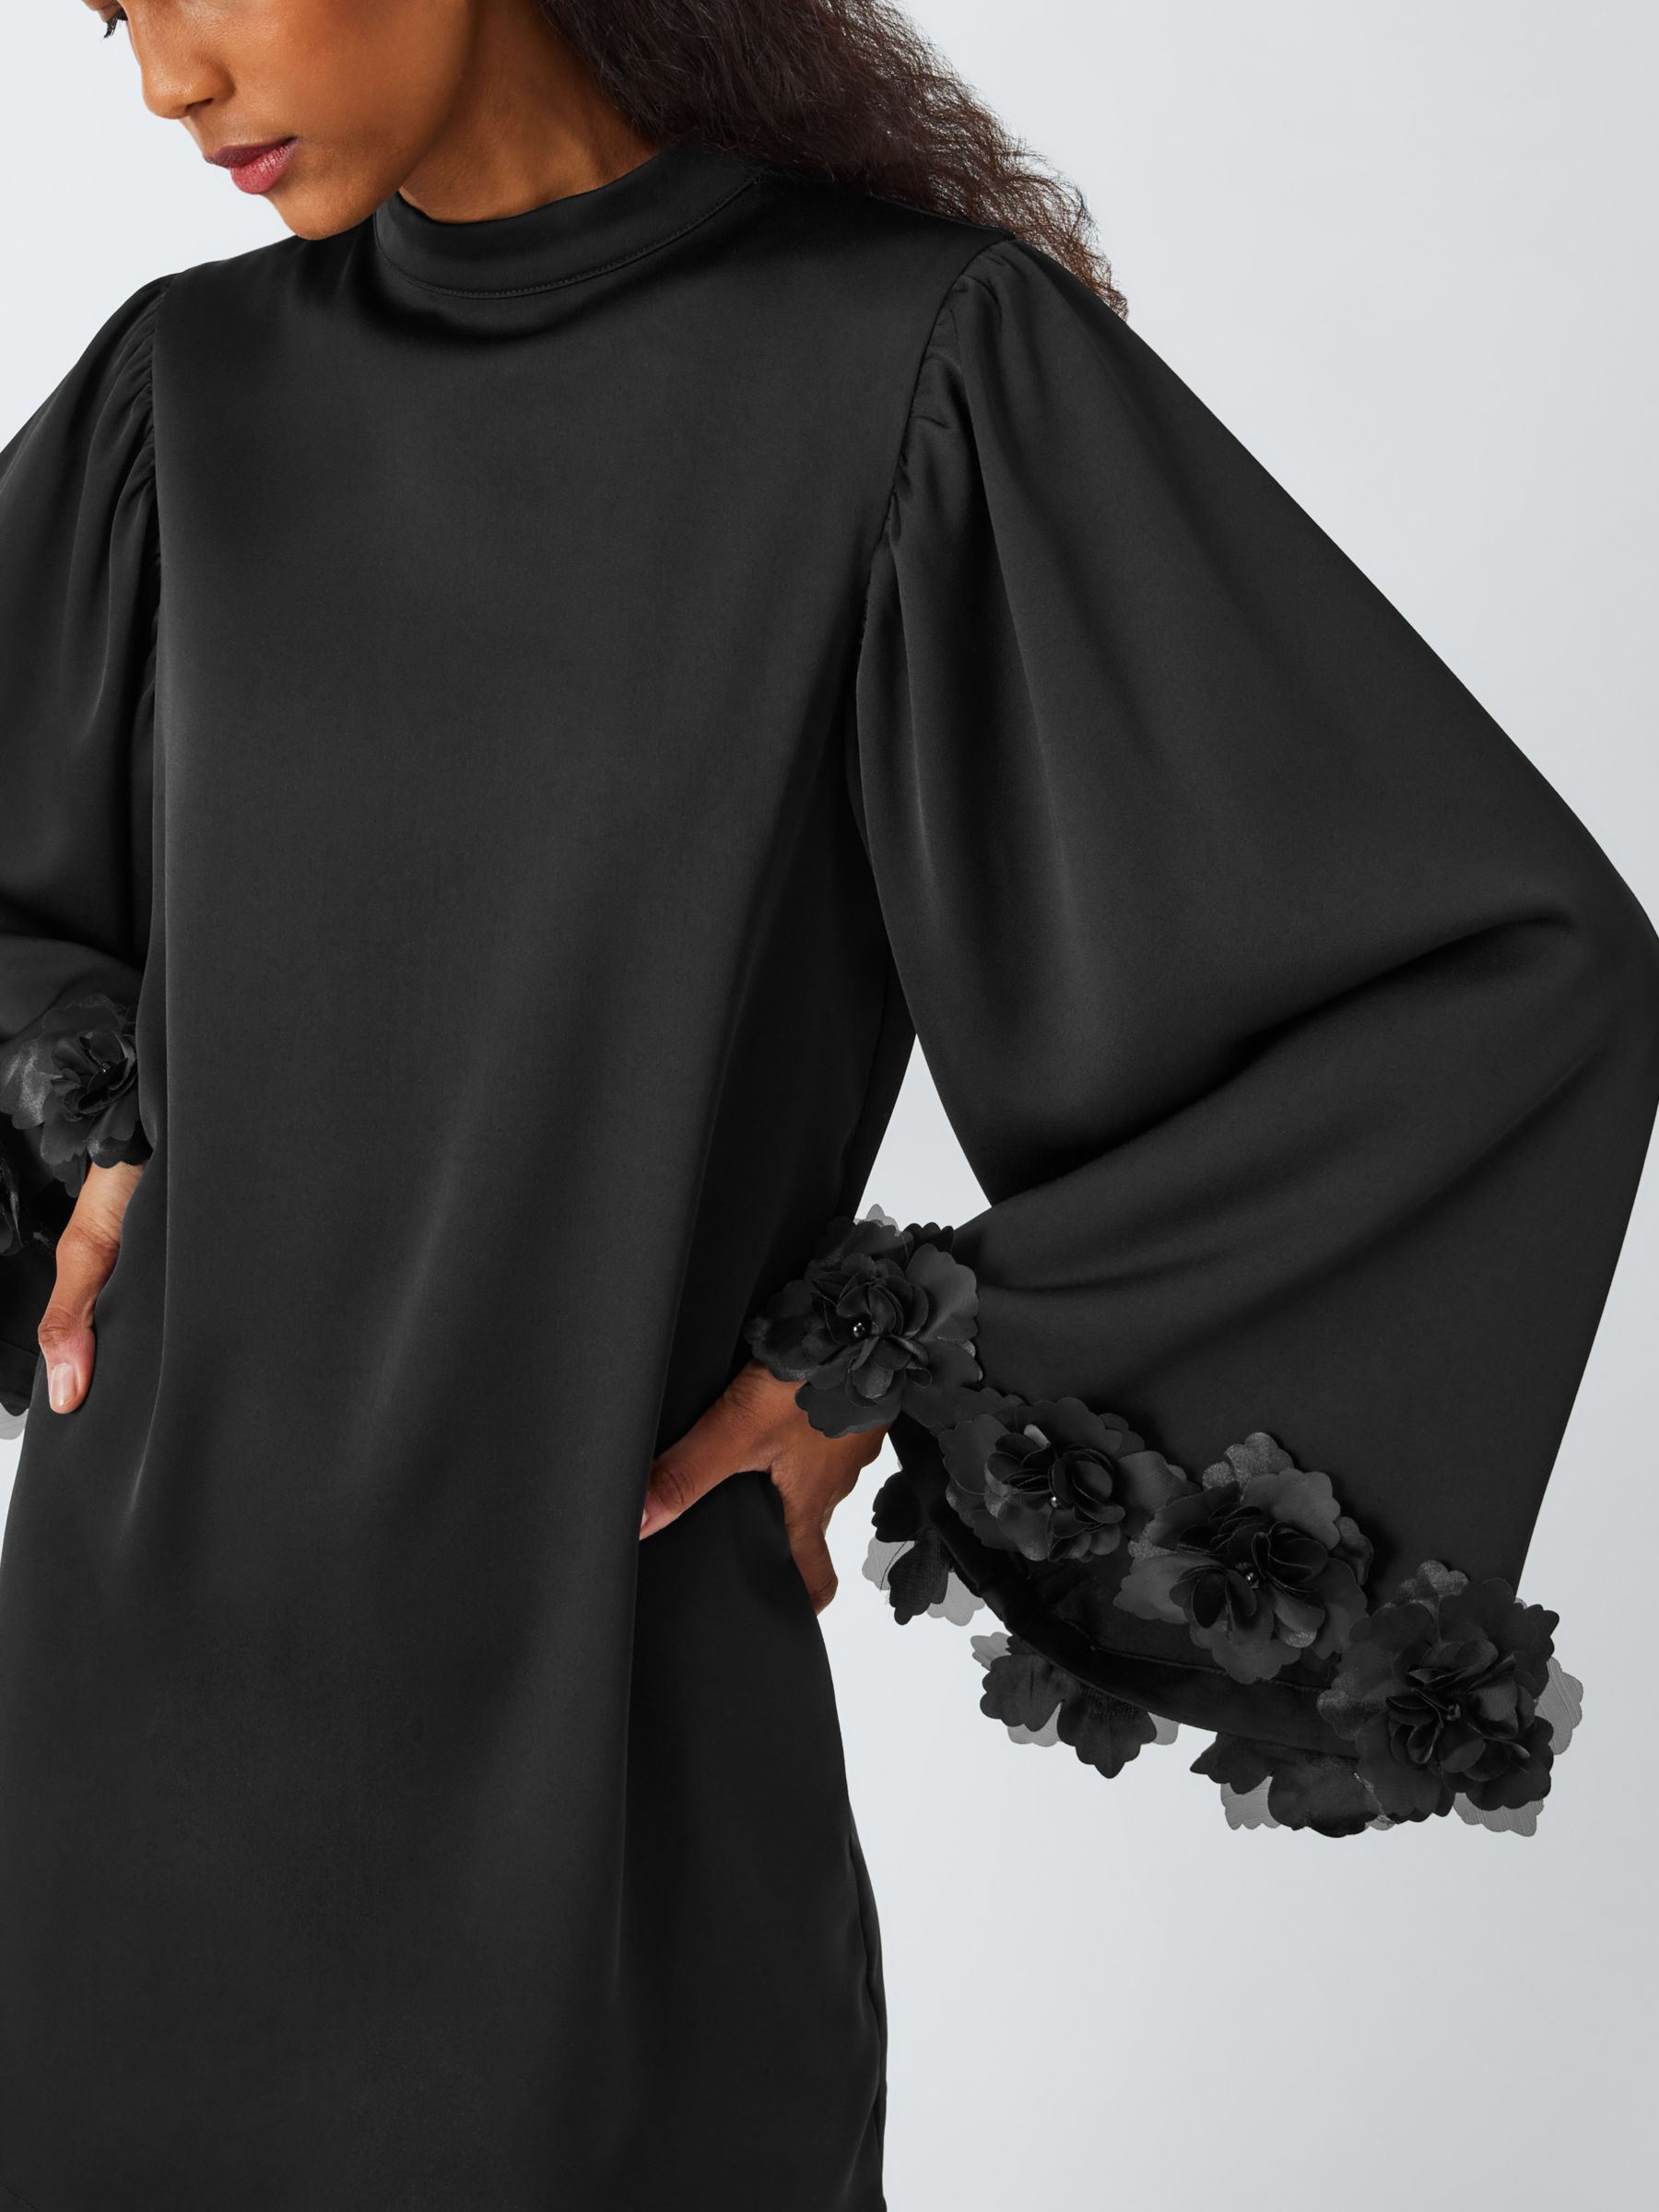 Sister Jane Dream Flower Trim Crepe Mini Dress, Black, 6